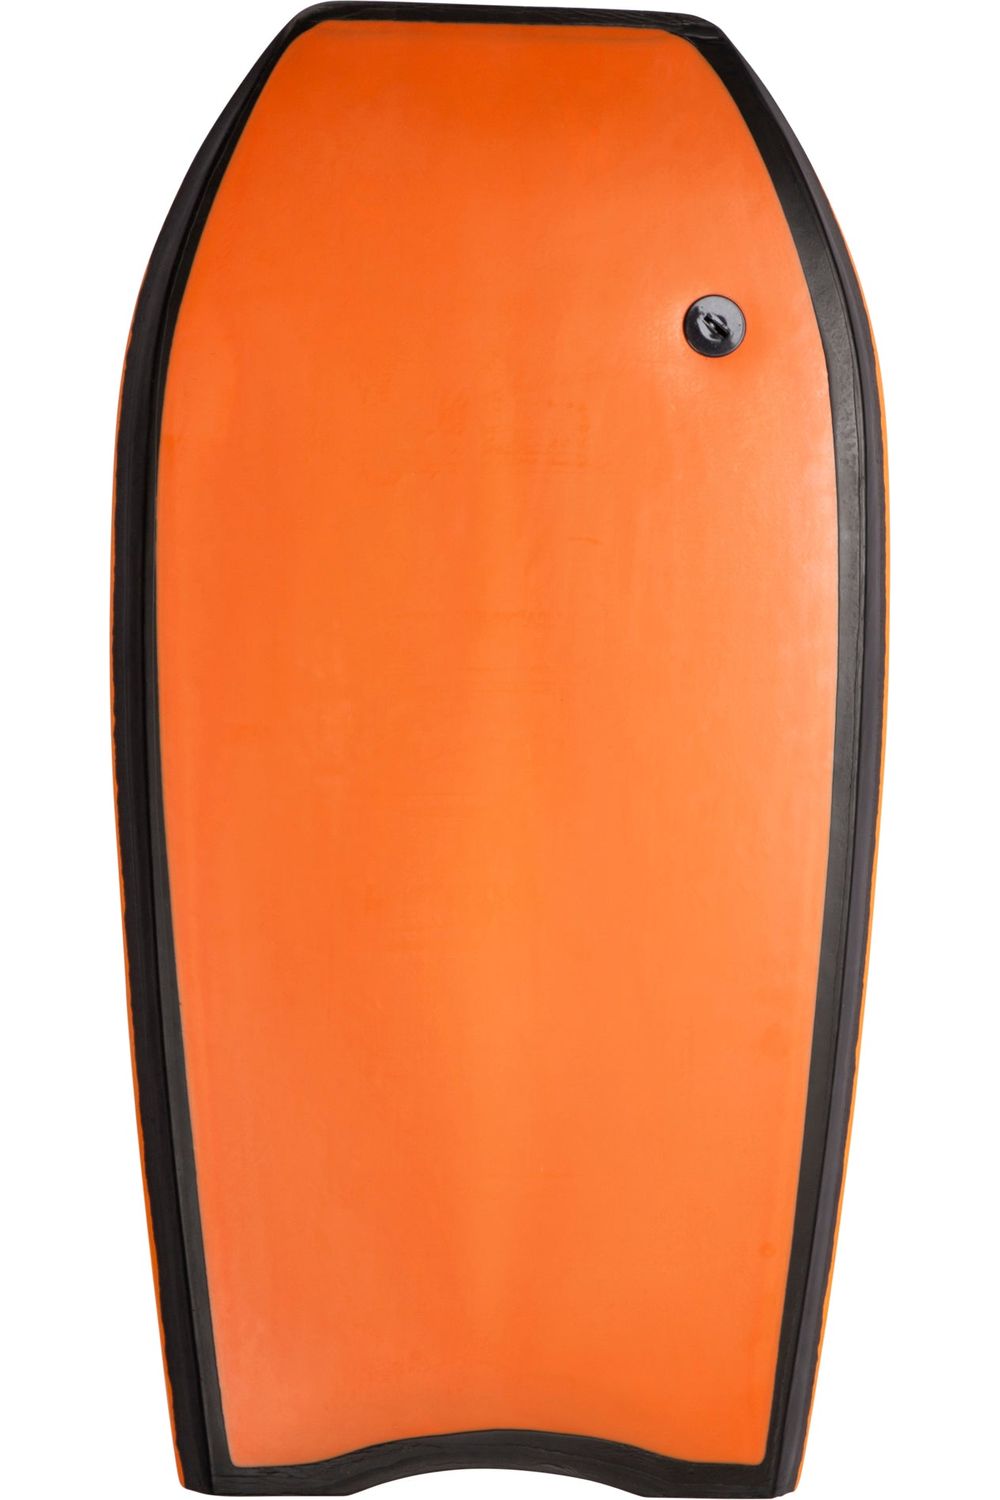 Atunas Supra Bodyboard 42" Orange Black